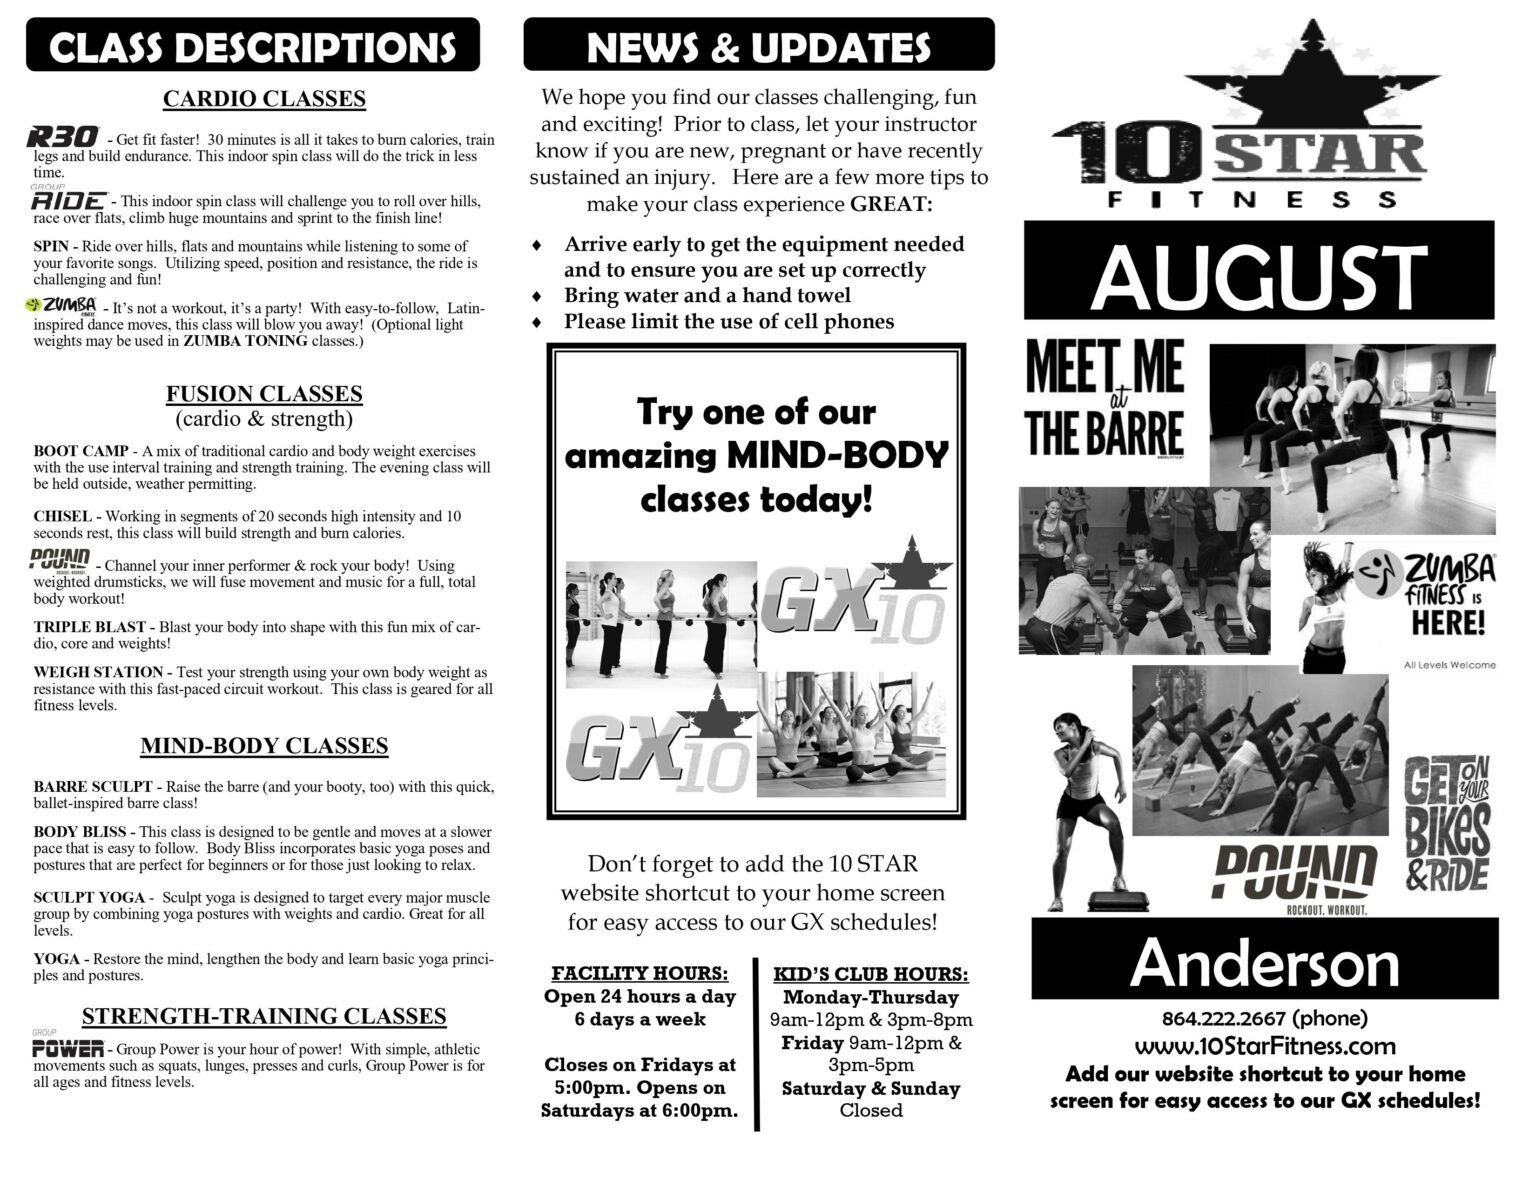 Anderson Calendar 10 Star Fitness